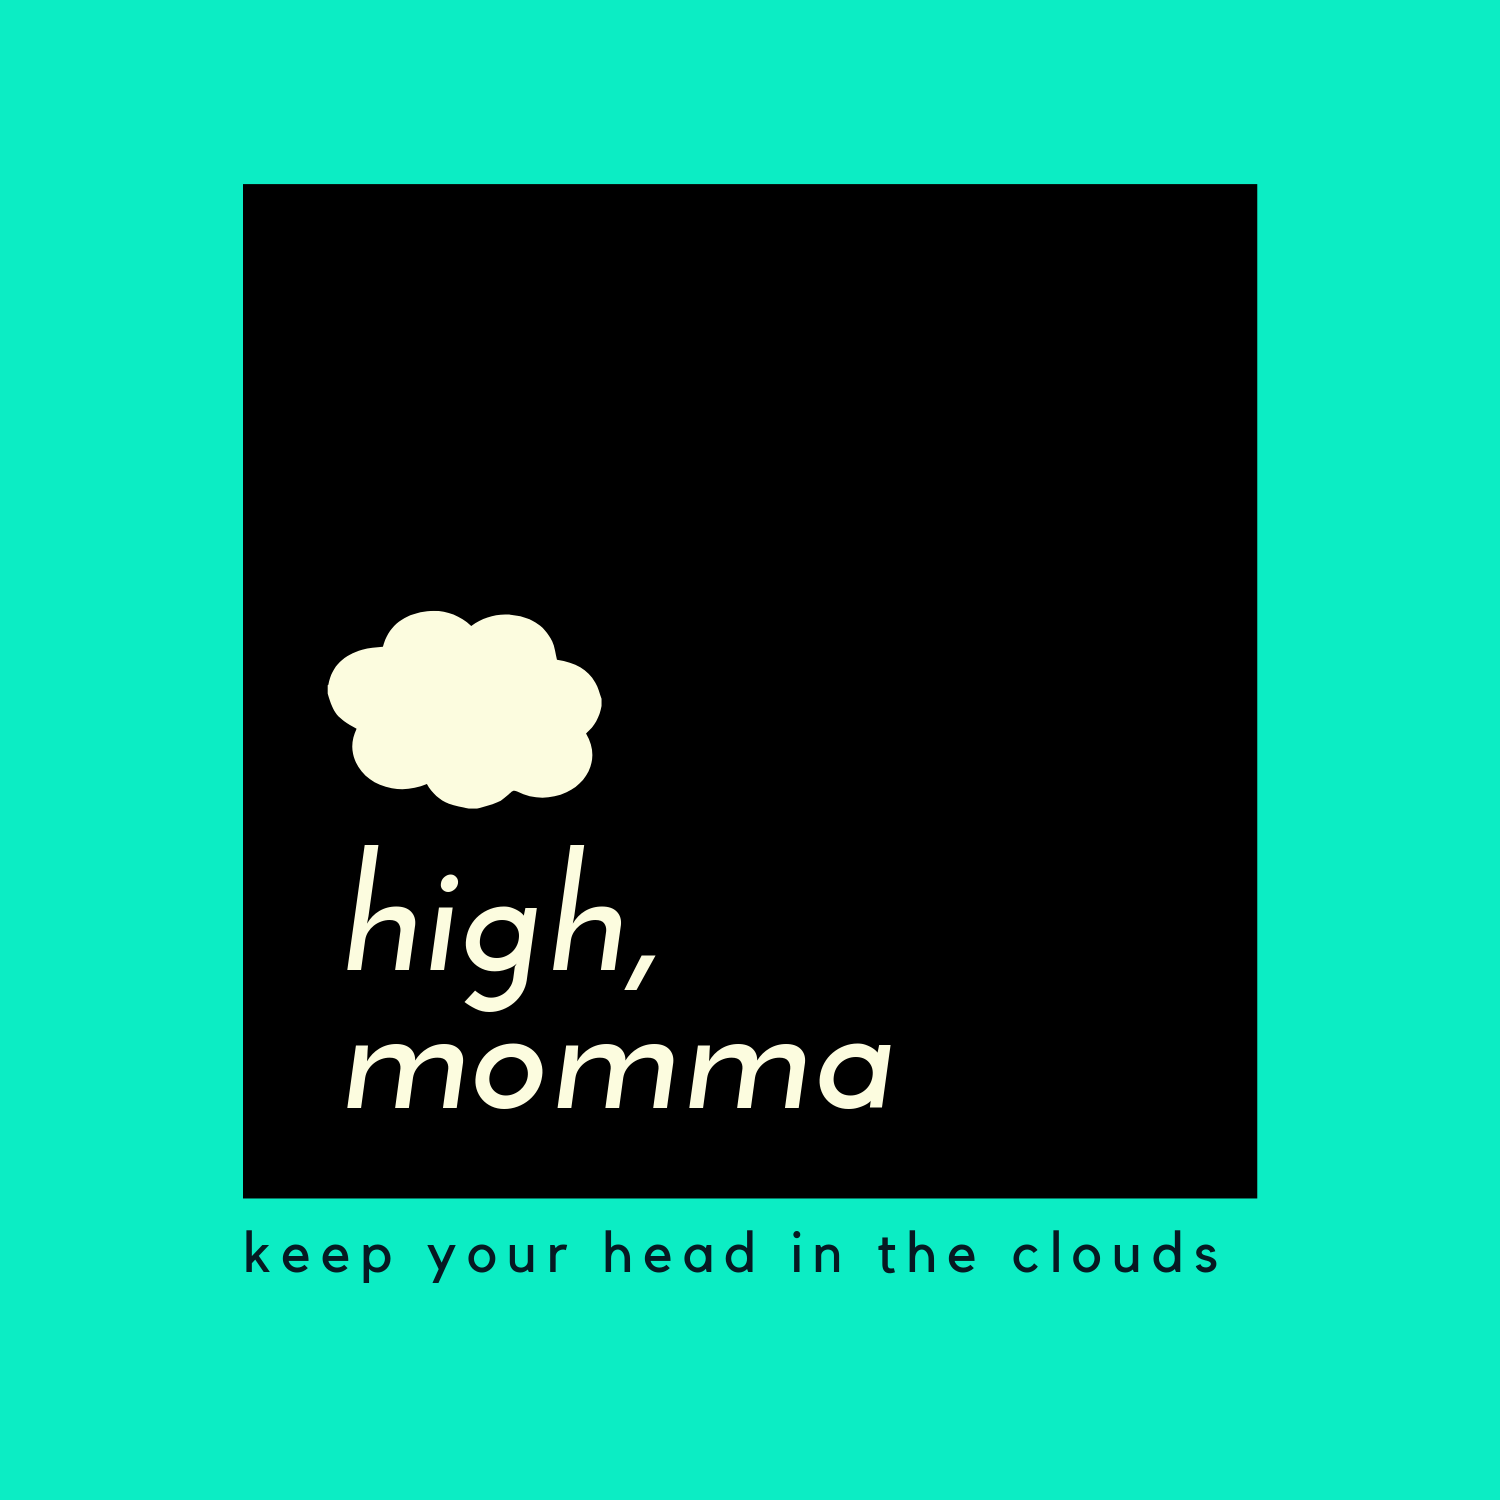 high, momma